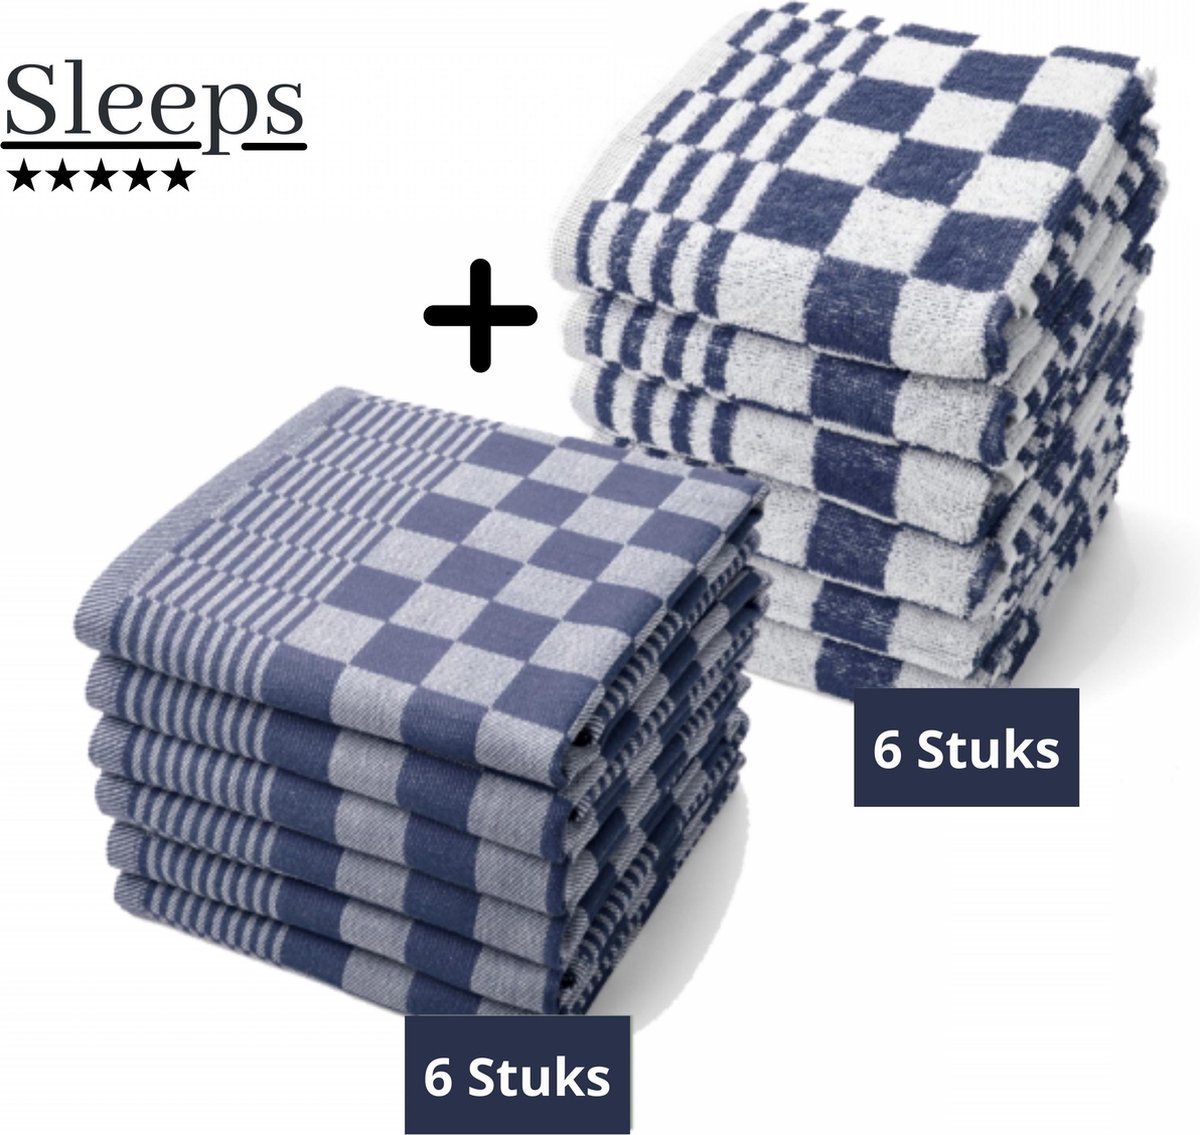 Sleeps® Horeca Kwaliteit Katoenen Keukendoeken & Theedoeken set - 6x Theedoeken + 6x Keukendoeken - Blauw Wit -